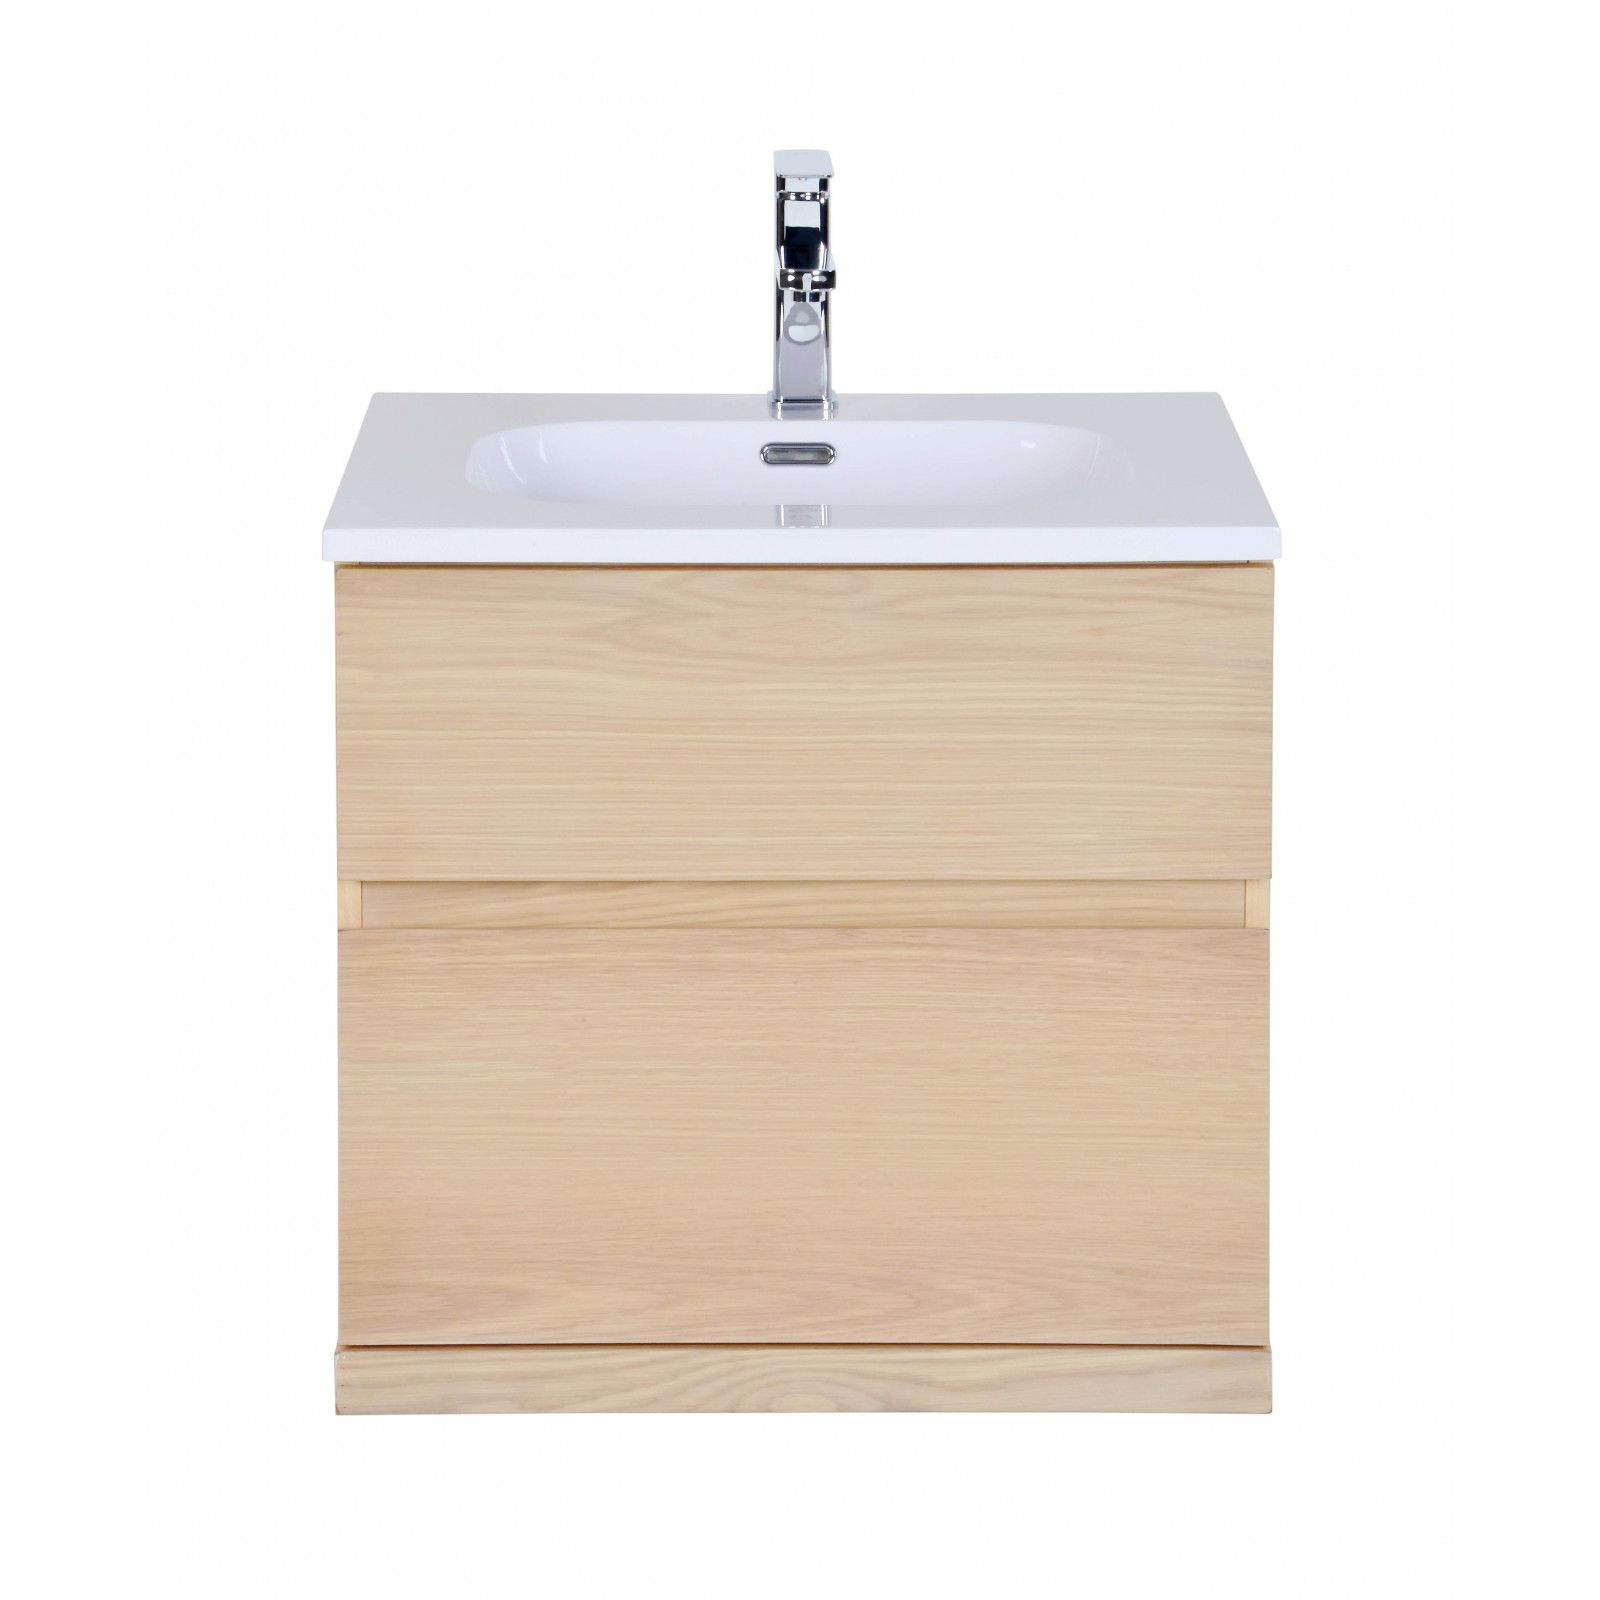 Ensemble salle de bain chêne 60 cm meuble + vasque + miroir + colonne ENIO